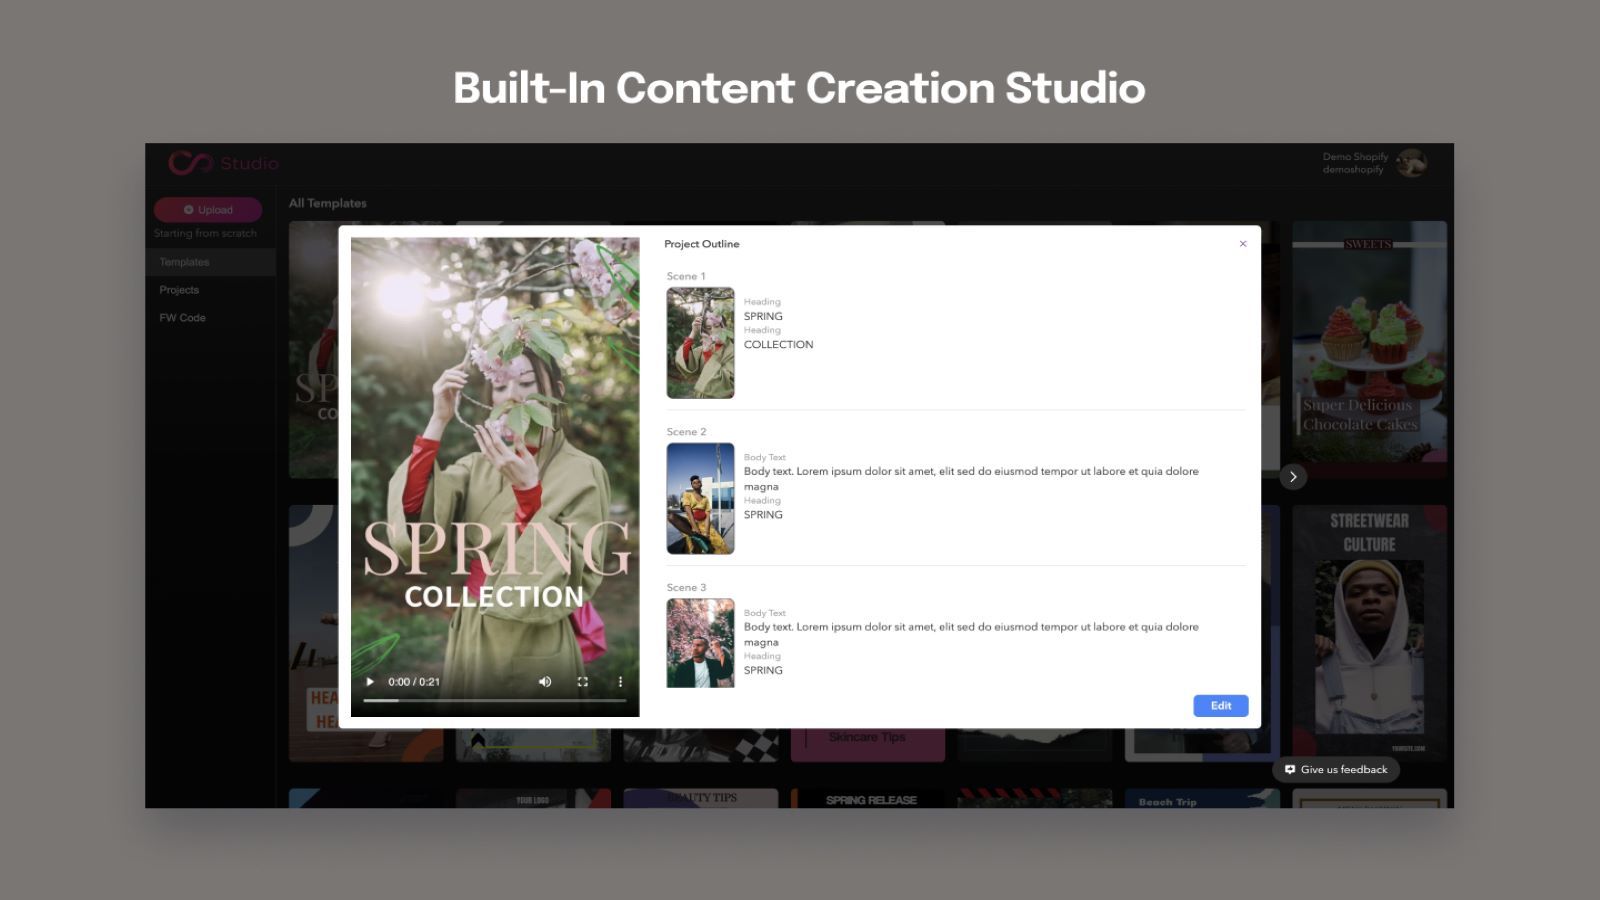 Built-In Content Creation Studio